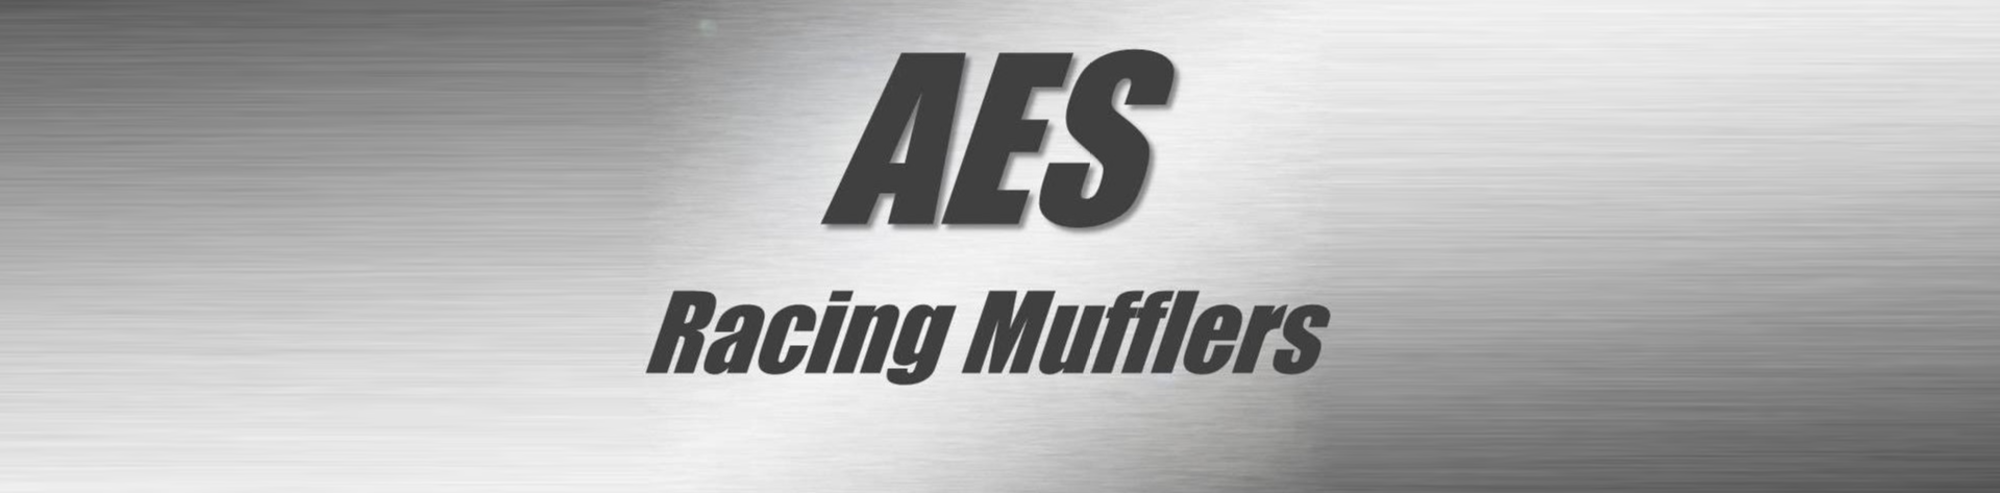 AES Racing Mufflers